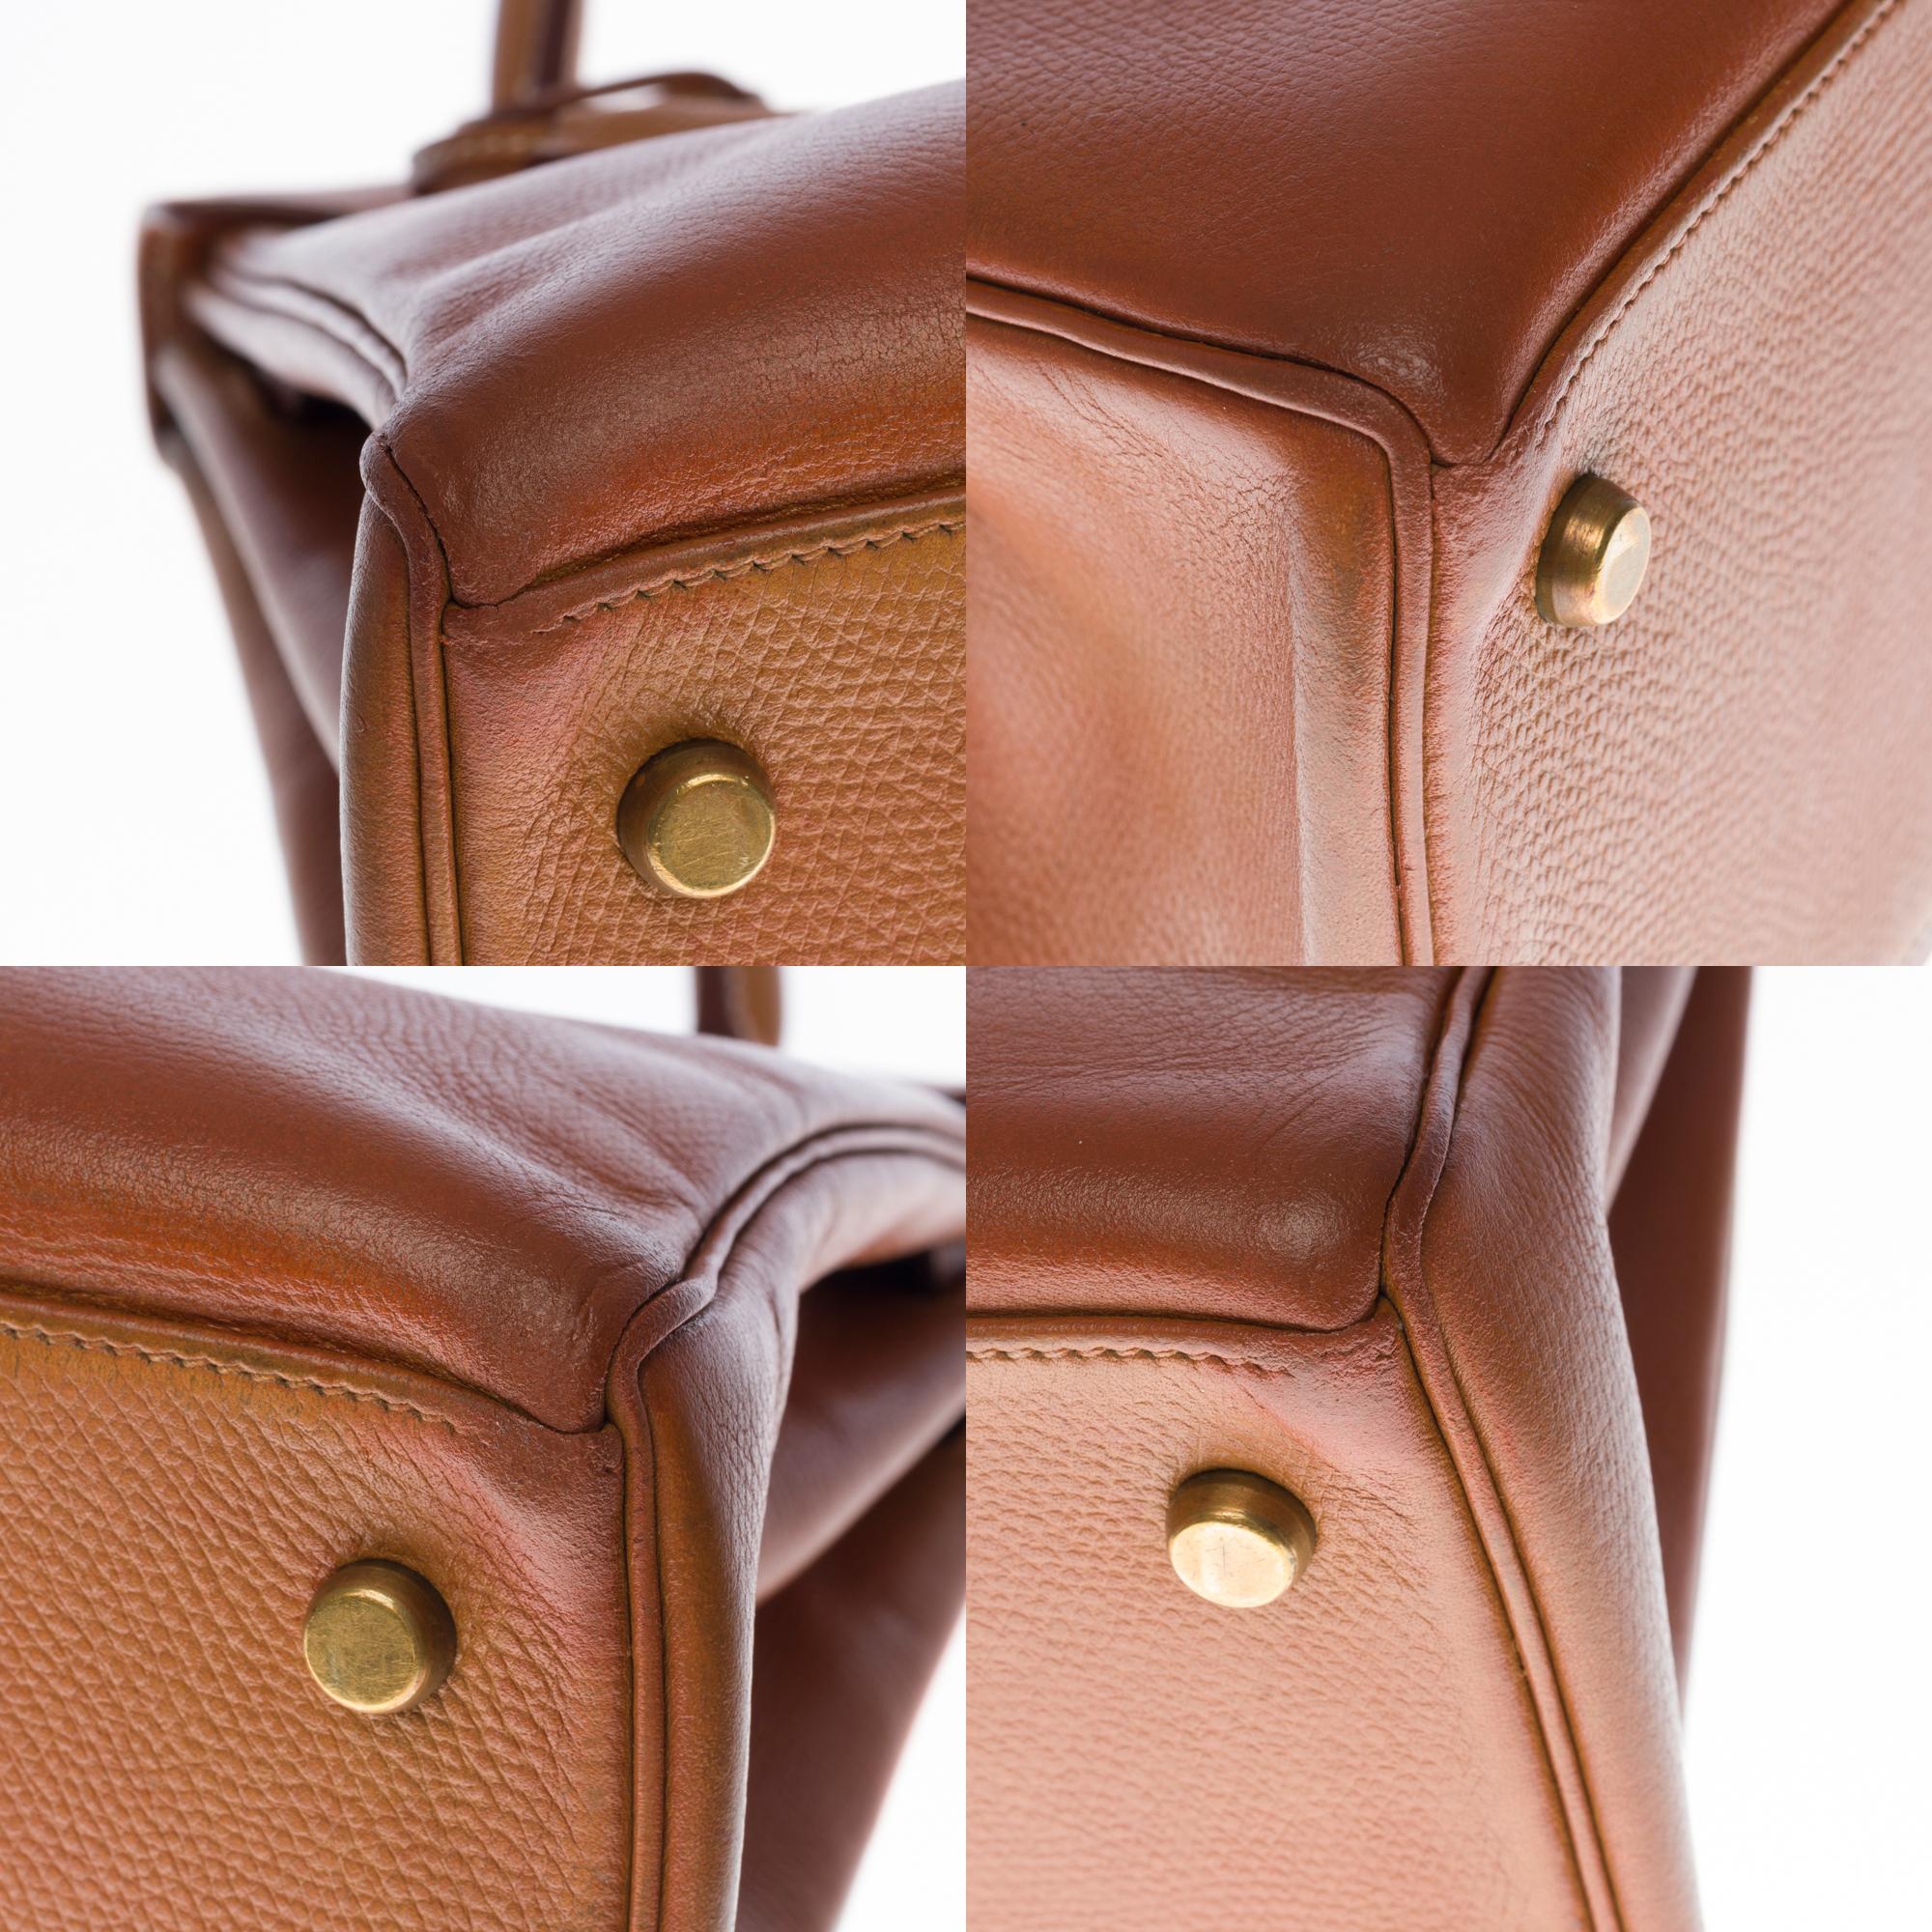 Hermès Kelly 28cm retourné handbag with strap in Gold Courchevel leather, GHW 5